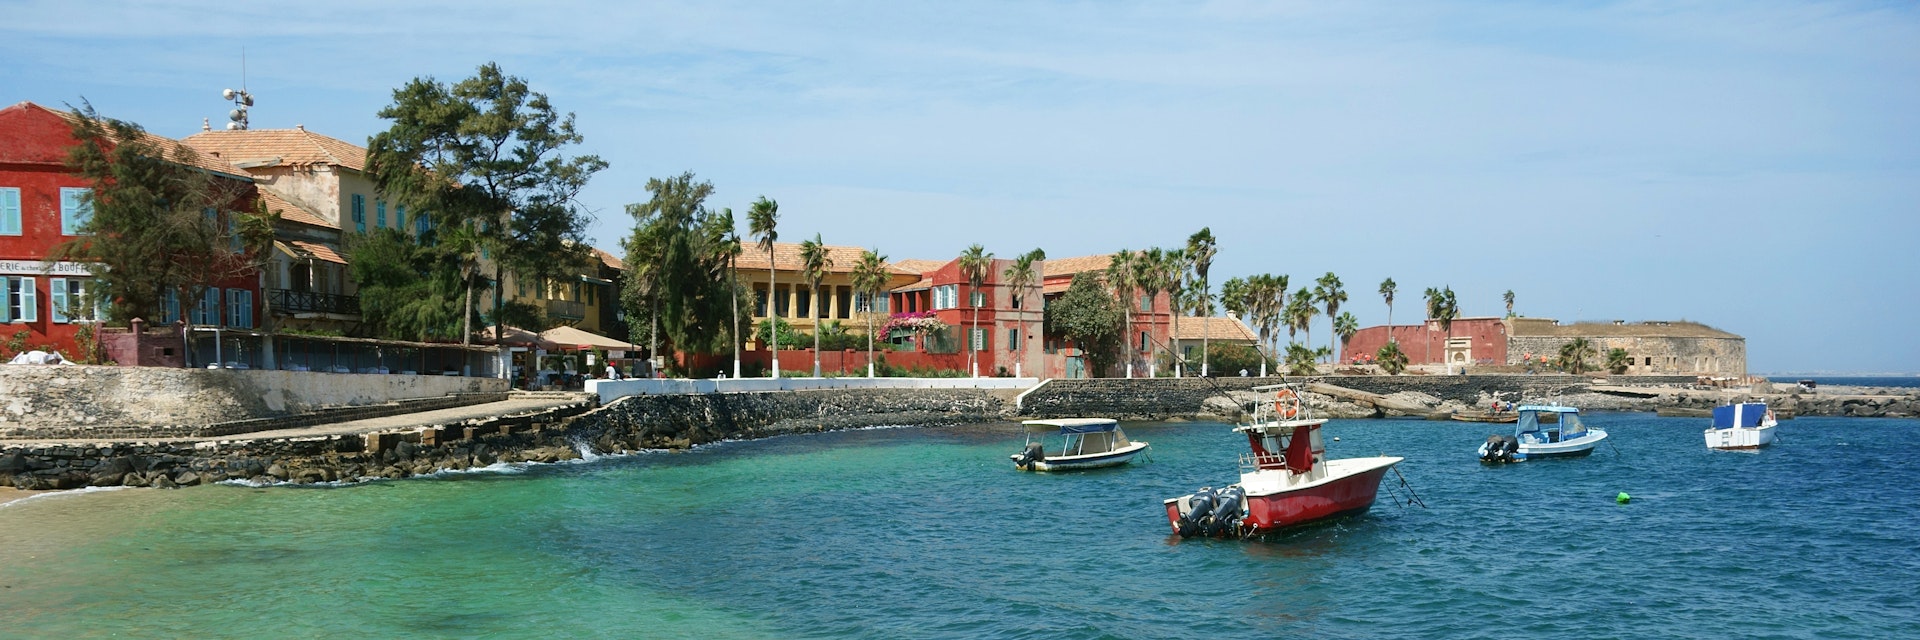 Ile de Goree Island, Senegal
